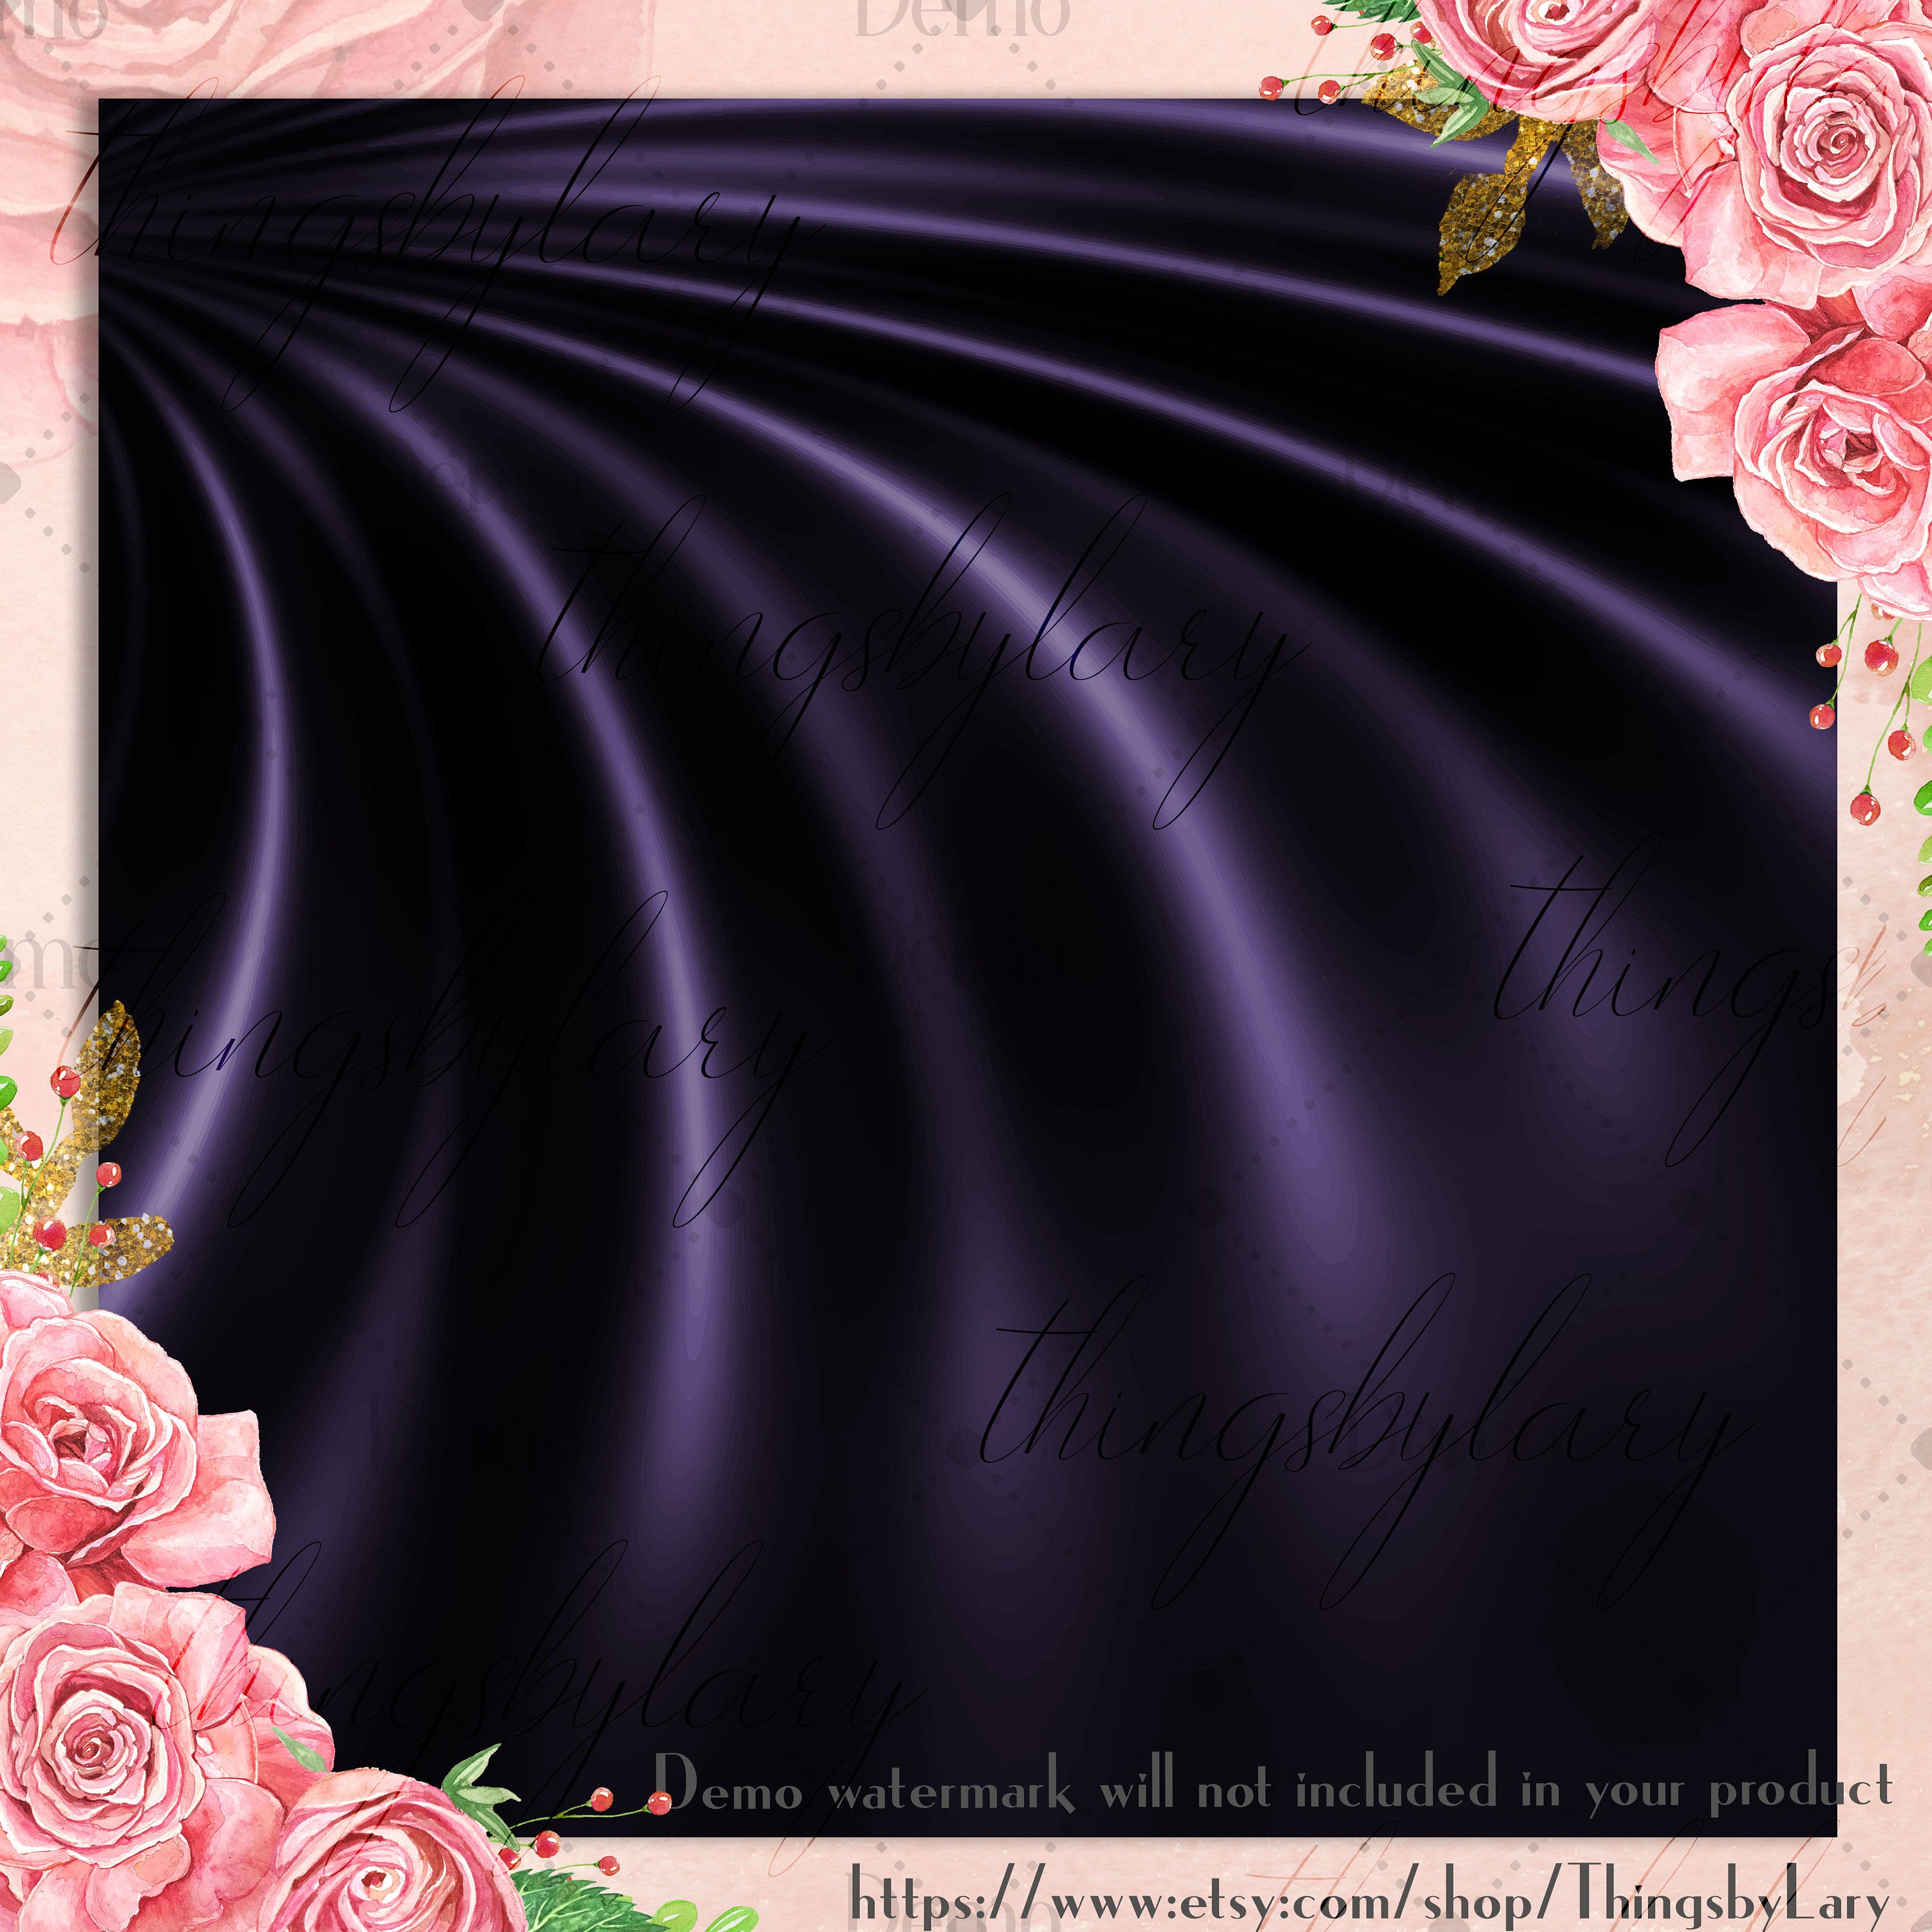 16 Ultra Violet Silk Texture Paper, luxury wedding, scrapbooking, sparkle, Satin Paper, Purple Satin, Purple Silk, Fabric Texture Paper